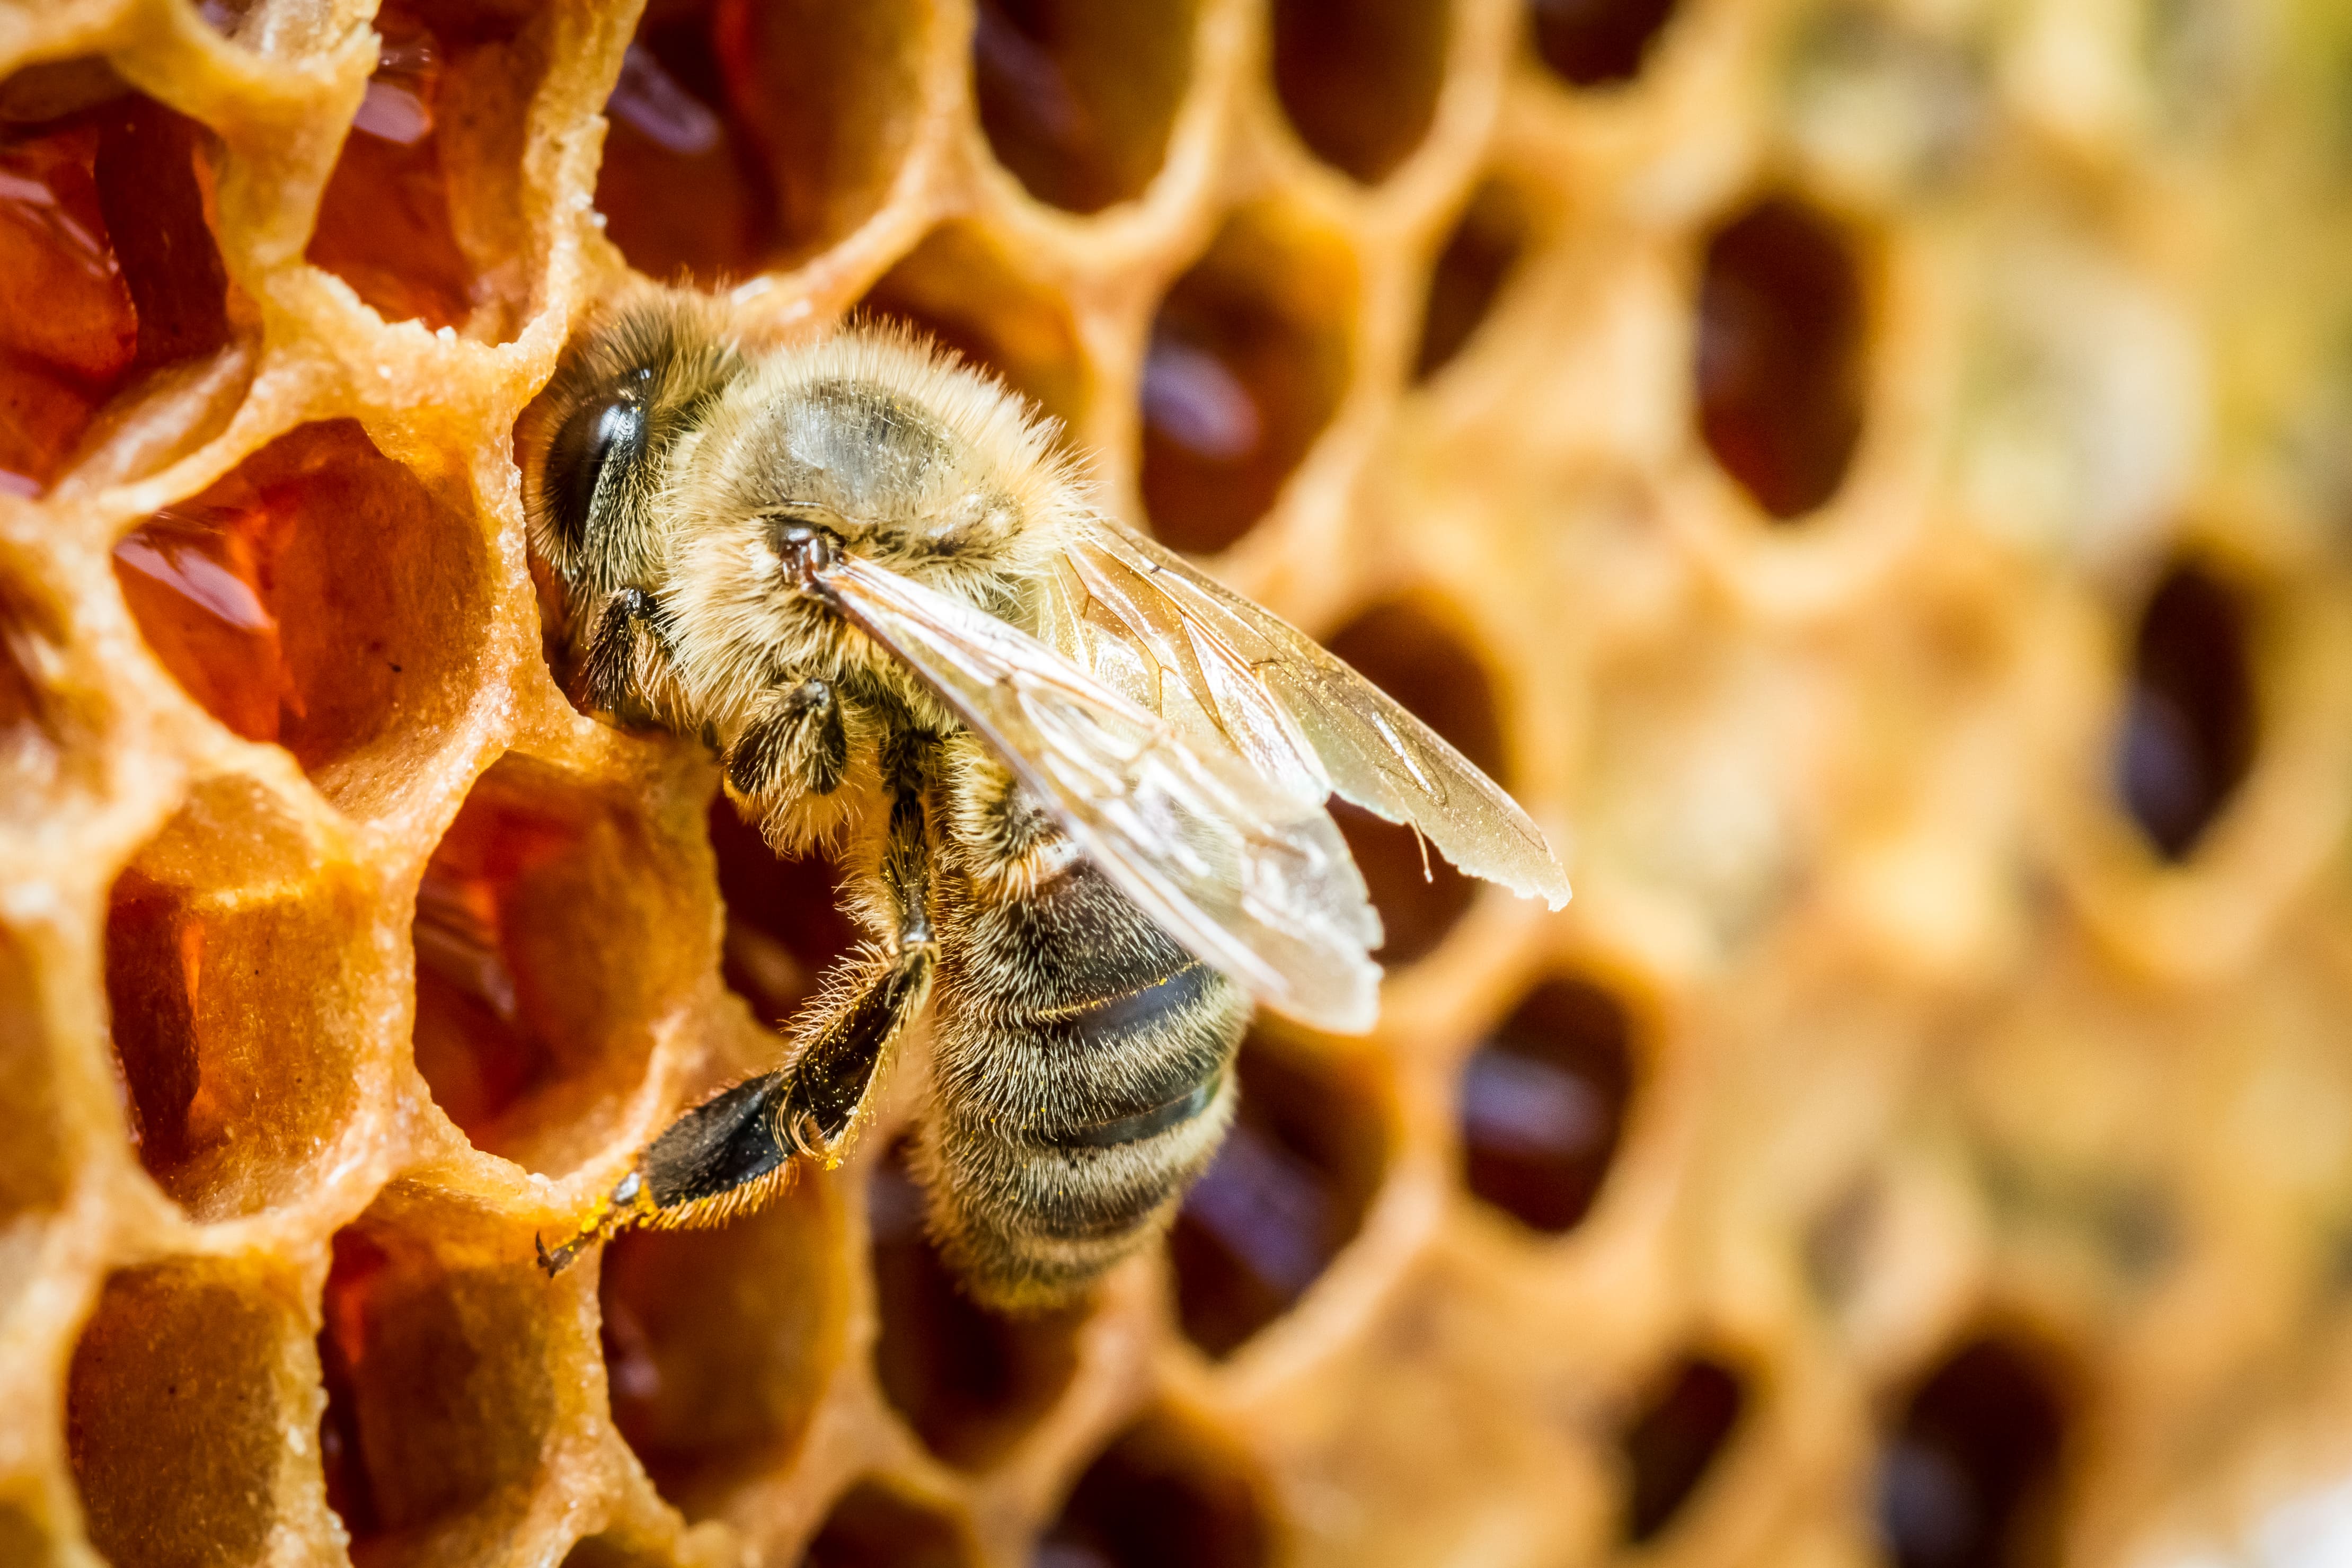 We ship to beekeepers in the following beekeeping cities near me in the state of Louisiana listings for queen honey bees supply results for beekeeping honeybee supplies for sale free shipping most orders over $100 around the United States: │Abbeville  70510 
│Abita Springs  70420 
│Acme  71316 
│Addis  70710 
│Aimwell  71401 
│Akers  70421 
│Albany  70711 
│Alexandria  71301 
│Ama  70031 
│Amelia  70340 
│Amite  70422 
│Anacoco  71403 
│Angie  70426 
│Angola  70712 
│Arabi  70032 
│Arcadia  71001 
│Archibald  71218 
│Arnaudville  70512 
│Ashland  71002 
│Athens  71003 
│Atlanta  71404 
│Avery Island  70513 
│Baker  70704 
│Baldwin  70514 
│Ball  71405 
│Barataria  70036 
│Barksdale Afb  71110 
│Basile  70515 
│Baskin  71219 
│Bastrop  71220 
│Batchelor  70715 
│Baton Rouge  70801 
│Belcher  71004 
│Bell City  70630 
│Belle Chasse  70037 
│Belle Rose  70341 
│Belmont  71406 
│Bentley  71407 
│Benton  71006 
│Bernice  71222 
│Berwick  70342 
│Bethany  71007 
│Bienville  71008 
│Blanchard  71009 
│Bogalusa  70427 
│Bonita  71223 
│Boothville  70038 
│Bordelonville  71320 
│Bossier City  71111 
│Bourg  70343 
│Boutte  70039 
│Boyce  71409 
│Braithwaite  70040 
│Branch  70516 
│Breaux Bridge  70517 
│Brittany  70718 
│Broussard  70518 
│Brusly  70719 
│Bunkie  71322 
│Buras  70041 
│Burnside  70738 
│Bush  70431 
│Cade  70519 
│Calhoun  71225 
│Calvin  71410 
│Cameron  70631 
│Campti  71411 
│Carencro  70520 
│Carville  70721 
│Castor  71016 
│Cecilia  70521 
│Center Point  71323 
│Centerville  70522 
│Chalmette  70043 
│Charenton  70523 
│Chase  71324 
│Chataignier  70524 
│Chatham  71226 
│Chauvin  70344 
│Cheneyville  71325 
│Choudrant  71227 
│Church Point  70525 
│Clarence  71414 
│Clarks  71415 
│Clayton  71326 
│Clinton  70722 
│Cloutierville  71416 
│Colfax  71417 
│Collinston  71229 
│Columbia  71418 
│Convent  70723 
│Converse  71419 
│Cotton Valley  71018 
│Cottonport  71327 
│Coushatta  71019 
│Covington  70433 
│Creole  70632 
│Crowley  70526 
│Crowville  71230 
│Cullen  71021 
│Cut Off  70345 
│Darrow  70725 
│Delcambre  70528 
│Delhi  71232 
│Delta  71233 
│Denham Springs  70706 
│Dequincy  70633 
│Deridder  70634 
│Des Allemands  70030 
│Destrehan  70047 
│Deville  71328 
│Dodson  71422 
│Donaldsonville  70346 
│Donner  70352 
│Downsville  71234 
│Doyline  71023 
│Dry Creek  70637 
│Dry Prong  71423 
│Dubach  71235 
│Dubberly  71024 
│Dulac  70353 
│Duplessis  70728 
│Dupont  71329 
│Duson  70529 
│East Point  71025 
│Echo  71330 
│Edgard  70049 
│Effie  71331 
│Egan  70531 
│Elizabeth  70638 
│Elm Grove  71051 
│Elmer  71424 
│Elton  70532 
│Empire  70050 
│Enterprise  71425 
│Epps  71237 
│Erath  70533 
│Eros  71238 
│Erwinville  70729 
│Estherwood  70534 
│Ethel  70730 
│Eunice  70535 
│Evangeline  70537 
│Evans  70639 
│Evergreen  71333 
│Fairbanks  71240 
│Farmerville  71241 
│Fenton  70640 
│Ferriday  71334 
│Fisher  71426 
│Flatwoods  71427 
│Flora  71428 
│Florien  71429 
│Fluker  70436 
│Folsom  70437 
│Fordoche  70732 
│Forest  71242 
│Forest Hill  71430 
│Fort Necessity  71243 
│Franklin  70538 
│Franklinton  70438 
│French Settlement  70733 
│Frierson  71027 
│Galliano  70354 
│Garden City  70540 
│Gardner  71431 
│Garyville  70051 
│Geismar  70734 
│Georgetown  71432 
│Gheens  70355 
│Gibsland  71028 
│Gibson  70356 
│Gilbert  71336 
│Gilliam  71029 
│Glenmora  71433 
│Gloster  71030 
│Glynn  70736 
│Golden Meadow  70357 
│Goldonna  71031 
│Gonzales  70707 
│Gorum  71434 
│Grambling  71245 
│Gramercy  70052 
│Grand Cane  71032 
│Grand Chenier  70643 
│Grand Coteau  70541 
│Grand Isle  70358 
│Grant  70644 
│Gray  70359 
│Grayson  71435 
│Greensburg  70441 
│Greenwell Springs  70739 
│Greenwood  71033 
│Gretna  70053 
│Grosse Tete  70740 
│Gueydan  70542 
│Hackberry  70645 
│Hahnville  70057 
│Hall Summit  71034 
│Hamburg  71339 
│Hammond  70401 
│Harmon  71036 
│Harrisonburg  71340 
│Harvey  70058 
│Haughton  71037 
│Hayes  70646 
│Haynesville  71038 
│Heflin  71039 
│Hessmer  71341 
│Hester  70743 
│Hineston  71438 
│Hodge  71247 
│Holden  70744 
│Homer  71040 
│Hornbeck  71439 
│Hosston  71043 
│Houma  70360 
│Husser  70442 
│Ida  71044 
│Independence  70443 
│Innis  70747 
│Iota  70543 
│Iowa  70647 
│Jackson  70748 
│Jamestown  71045 
│Jarreau  70749 
│Jeanerette  70544 
│Jena  71342 
│Jennings  70546 
│Jigger  71249 
│Jones  71250 
│Jonesboro  71251 
│Jonesville  71343 
│Joyce  71440 
│Kaplan  70548 
│Keatchie  71046 
│Keithville  71047 
│Kelly  71441 
│Kenner  70062 
│Kentwood  70444 
│Kilbourne  71253 
│Kinder  70648 
│Kraemer  70371 
│Krotz Springs  70750 
│Kurthwood  71443 
│La Place  70068 
│Labadieville  70372 
│Lacassine  70650 
│Lacombe  70445 
│Lafayette  70501 
│Lafitte  70067 
│Lake Arthur  70549 
│Lake Charles  70601 
│Lake Providence  71254 
│Lakeland  70752 
│Larose  70373 
│Lawtell  70550 
│Lebeau  71345 
│Leblanc  70651 
│Lecompte  71346 
│Leesville  71446 
│Lena  71447 
│Leonville  70551 
│Lettsworth  70753 
│Libuse  71348 
│Lillie  71256 
│Lisbon  71048 
│Livingston  70754 
│Livonia  70755 
│Lockport  70374 
│Logansport  71049 
│Longleaf  71448 
│Longstreet  71050 
│Longville  70652 
│Loranger  70446 
│Loreauville  70552 
│Lottie  70756 
│Luling  70070 
│Lutcher  70071 
│Lydia  70569 
│Madisonville  70447 
│Mamou  70554 
│Mandeville  70448 
│Mangham  71259 
│Mansfield  71052 
│Mansura  71350 
│Many  71449 
│Maringouin  70757 
│Marion  71260 
│Marksville  71351 
│Marrero  70072 
│Marthaville  71450 
│Mathews  70375 
│Maurepas  70449 
│Maurice  70555 
│Melrose  71452 
│Melville  71353 
│Mer Rouge  71261 
│Meraux  70075 
│Mermentau  70556 
│Merryville  70653 
│Metairie  70001 
│Milton  70558 
│Minden  71055 
│Mittie  70654 
│Monroe  71201 
│Montegut  70377 
│Monterey  71354 
│Montgomery  71454 
│Mooringsport  71060 
│Mora  71455 
│Moreauville  71355 
│Morgan City  70380 
│Morganza  70759 
│Morrow  71356 
│Morse  70559 
│Mount Airy  70076 
│Mount Hermon  70450 
│Napoleonville  70390 
│Natalbany  70451 
│Natchez  71456 
│Natchitoches  71457 
│Negreet  71460 
│New Iberia  70560 
│New Orleans  70112 
│New Roads  70760 
│New Sarpy  70078 
│Newellton  71357 
│Newllano  71461 
│Noble  71462 
│Norco  70079 
│Norwood  70761 
│Oak Grove  71263 
│Oak Ridge  71264 
│Oakdale  71463 
│Oberlin  70655 
│Oil City  71061 
│Olla  71465 
│Opelousas  70570 
│Oscar  70762 
│Otis  71466 
│Paincourtville  70391 
│Palmetto  71358 
│Paradis  70080 
│Patterson  70392 
│Paulina  70763 
│Pearl River  70452 
│Pelican  71063 
│Perry  70575 
│Pierre Part  70339 
│Pilottown  70081 
│Pine Grove  70453 
│Pine Prairie  70576 
│Pineville  71359 
│Pioneer  71266 
│Pitkin  70656 
│Plain Dealing  71064 
│Plaquemine  70764 
│Plattenville  70393 
│Plaucheville  71362 
│Pleasant Hill  71065 
│Pointe A La Hache  70082 
│Pollock  71467 
│Ponchatoula  70454 
│Port Allen  70767 
│Port Barre  70577 
│Port Sulphur  70083 
│Powhatan  71066 
│Prairieville  70769 
│Pride  70770 
│Princeton  71067 
│Provencal  71468 
│Quitman  71268 
│Raceland  70394 
│Ragley  70657 
│Rayne  70578 
│Rayville  71269 
│Reddell  70580 
│Reeves  70658 
│Reserve  70084 
│Rhinehart  71363 
│Ringgold  71068 
│Roanoke  70581 
│Robeline  71469 
│Robert  70455 
│Rodessa  71069 
│Rosedale  70772 
│Roseland  70456 
│Rosepine  70659 
│Rougon  70773 
│Ruby  71365 
│Ruston  71270 
│Saint Amant  70774 
│Saint Benedict  70457 
│Saint Bernard  70085 
│Saint Francisville  70775 
│Saint Gabriel  70776 
│Saint James  70086 
│Saint Joseph  71366 
│Saint Landry  71367 
│Saint Martinville  70582 
│Saint Maurice  71471 
│Saint Rose  70087 
│Saline  71070 
│Sarepta  71071 
│Schriever  70395 
│Scott  70583 
│Shongaloo  71072 
│Shreveport  71101 
│Sibley  71073 
│Sicily Island  71368 
│Sieper  71472 
│Sikes  71473 
│Simmesport  71369 
│Simpson  71474 
│Simsboro  71275 
│Singer  70660 
│Slagle  71475 
│Slaughter  70777 
│Slidell  70458 
│Sondheimer  71276 
│Sorrento  70778 
│Spearsville  71277 
│Springfield  70462 
│Springhill  71075 
│Starks  70661 
│Start  71279 
│Sterlington  71280 
│Stonewall  71078 
│Sugartown  70662 
│Sulphur  70663 
│Summerfield  71079 
│Sun  70463 
│Sunset  70584 
│Sunshine  70780 
│Swartz  71281 
│Talisheek  70464 
│Tallulah  71282 
│Tangipahoa  70465 
│Taylor  71080 
│Theriot  70397 
│Thibodaux  70301 
│Tickfaw  70466 
│Tioga  71477 
│Transylvania  71286 
│Trout  71371 
│Tullos  71479 
│Tunica  70782 
│Turkey Creek  70585 
│Uncle Sam  70792 
│Urania  71480 
│Vacherie  70090 
│Varnado  70467 
│Venice  70091 
│Ventress  70783 
│Vidalia  71373 
│Ville Platte  70586 
│Vinton  70668 
│Violet  70092 
│Vivian  71082 
│Wakefield  70784 
│Walker  70785 
│Washington  70589 
│Waterproof  71375 
│Watson  70786 
│Welsh  70591 
│West Monroe  71291 
│Westlake  70669 
│Westwego  70094 
│Weyanoke  70787 
│White Castle  70788 
│Wildsville  71377 
│Wilson  70789 
│Winnfield  71483 
│Winnsboro  71295 
│Wisner  71378 
│Woodworth  71485 
│Youngsville  70592 
│Zachary  70791 
│Zwolle  71486 || Lappe's Bee Supply offers free shipping for most orders over $100 to the following counties in the state of Louisiana: │Acadia Parish 
│Allen Parish 
│Ascension Parish 
│Assumption Parish 
│Avoyelles Parish 
│Beauregard Parish 
│Bienville Parish 
│Bossier Parish 
│Caddo Parish 
│Calcasieu Parish 
│Caldwell Parish 
│Cameron Parish 
│Catahoula Parish 
│Claiborne Parish 
│Concordia Parish 
│DeSoto Parish 
│East Baton Rouge Parish 
│East Carroll Parish 
│East Feliciana Parish 
│Evangeline Parish 
│Franklin Parish 
│Grant Parish 
│Iberia Parish 
│Iberville Parish 
│Jackson Parish 
│Jefferson Parish 
│Jefferson Davis Parish 
│Lafayette Parish 
│Lafourche Parish 
│LaSalle Parish 
│Lincoln Parish 
│Livingston Parish 
│Madison Parish 
│Morehouse Parish 
│Natchitoches Parish 
│Orleans Parish 
│Ouachita Parish 
│Plaquemines Parish 
│Pointe Coupee Parish 
│Rapides Parish 
│Red River Parish 
│Richland Parish 
│Sabine Parish 
│Saint Bernard Parish 
│Saint Charles Parish 
│Saint Helena Parish 
│Saint James Parish 
│Saint John the Baptist Parish 
│Saint Landry Parish 
│Saint Martin Parish 
│Saint Mary Parish 
│Saint Tammany Parish 
│Tangipahoa Parish 
│Tensas Parish 
│Terrebonne Parish 
│Union Parish 
│Vermilion Parish 
│Vernon Parish 
│Washington Parish 
│Webster Parish 
│West Baton Rouge Parish 
│West Carroll Parish 
│West Feliciana Parish 
│Winn Parish